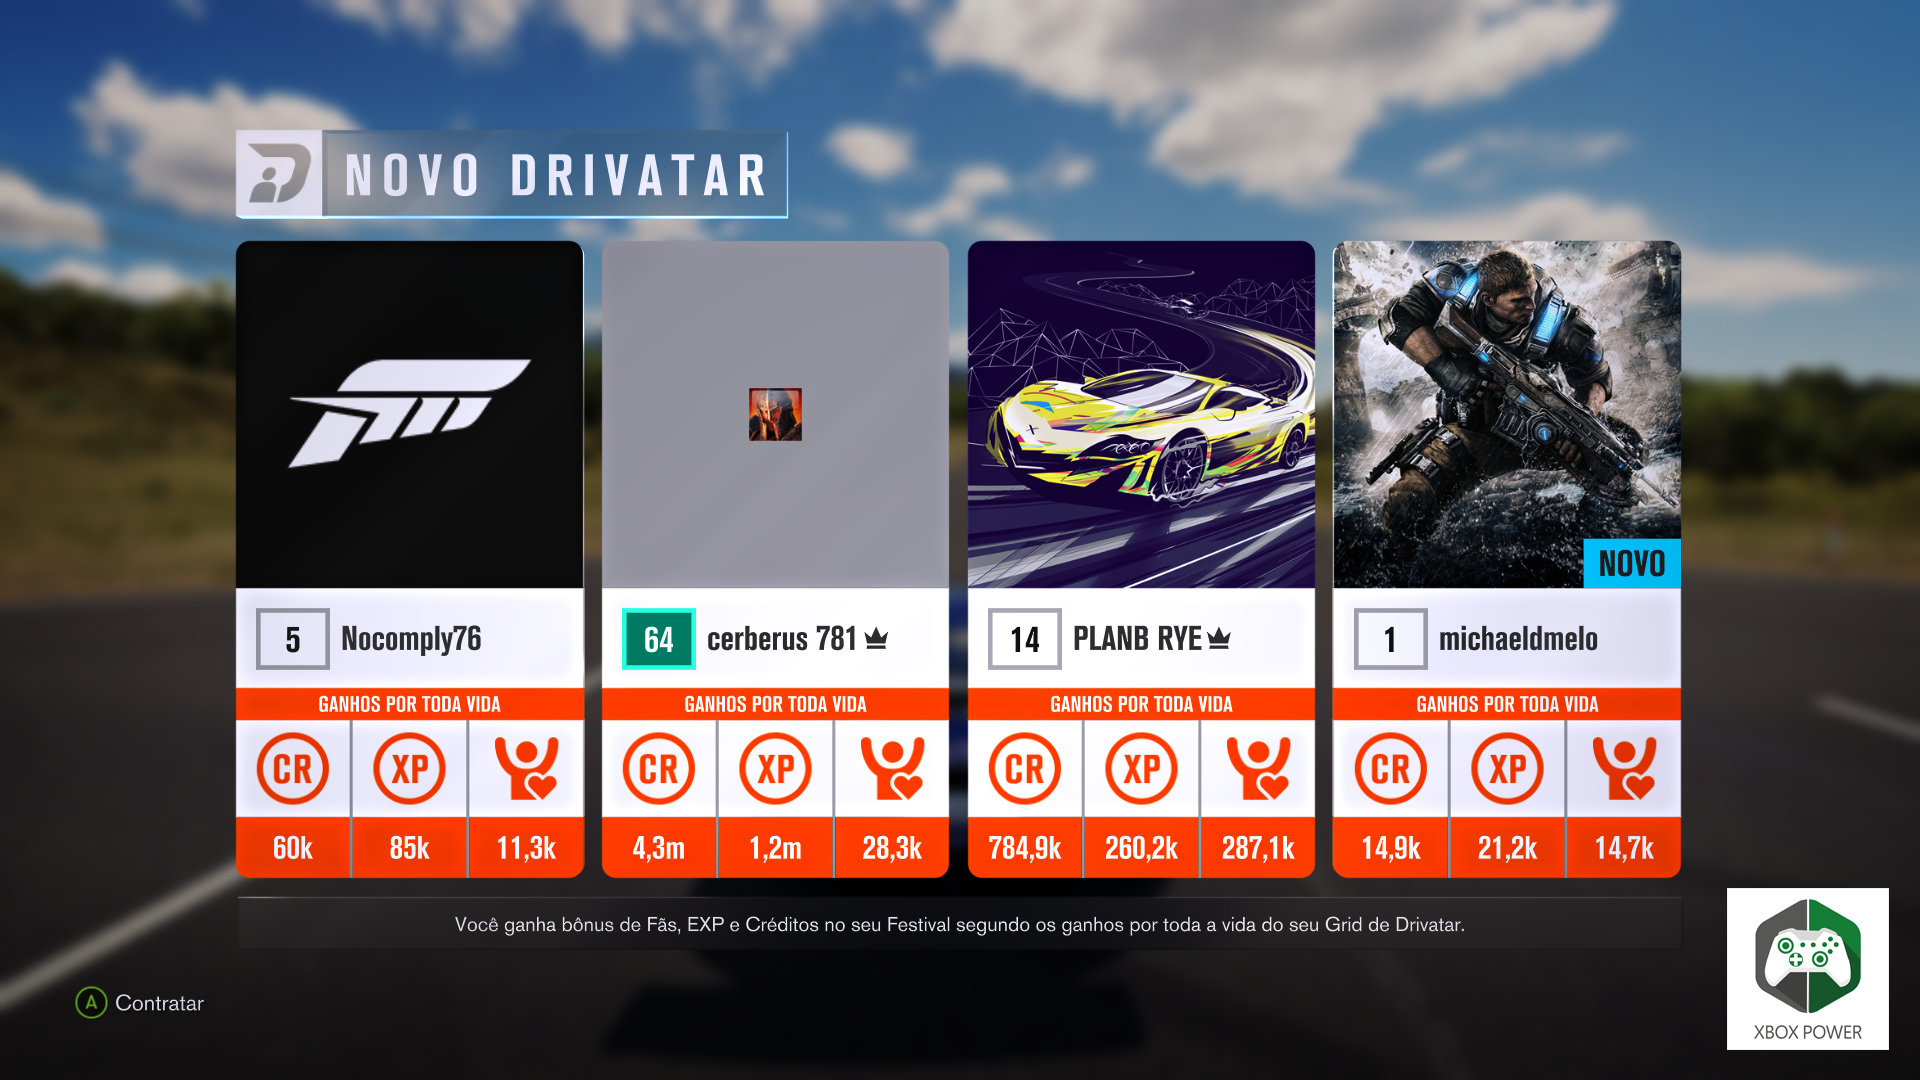 Análise Forza Horizon 3 (Xbox One)